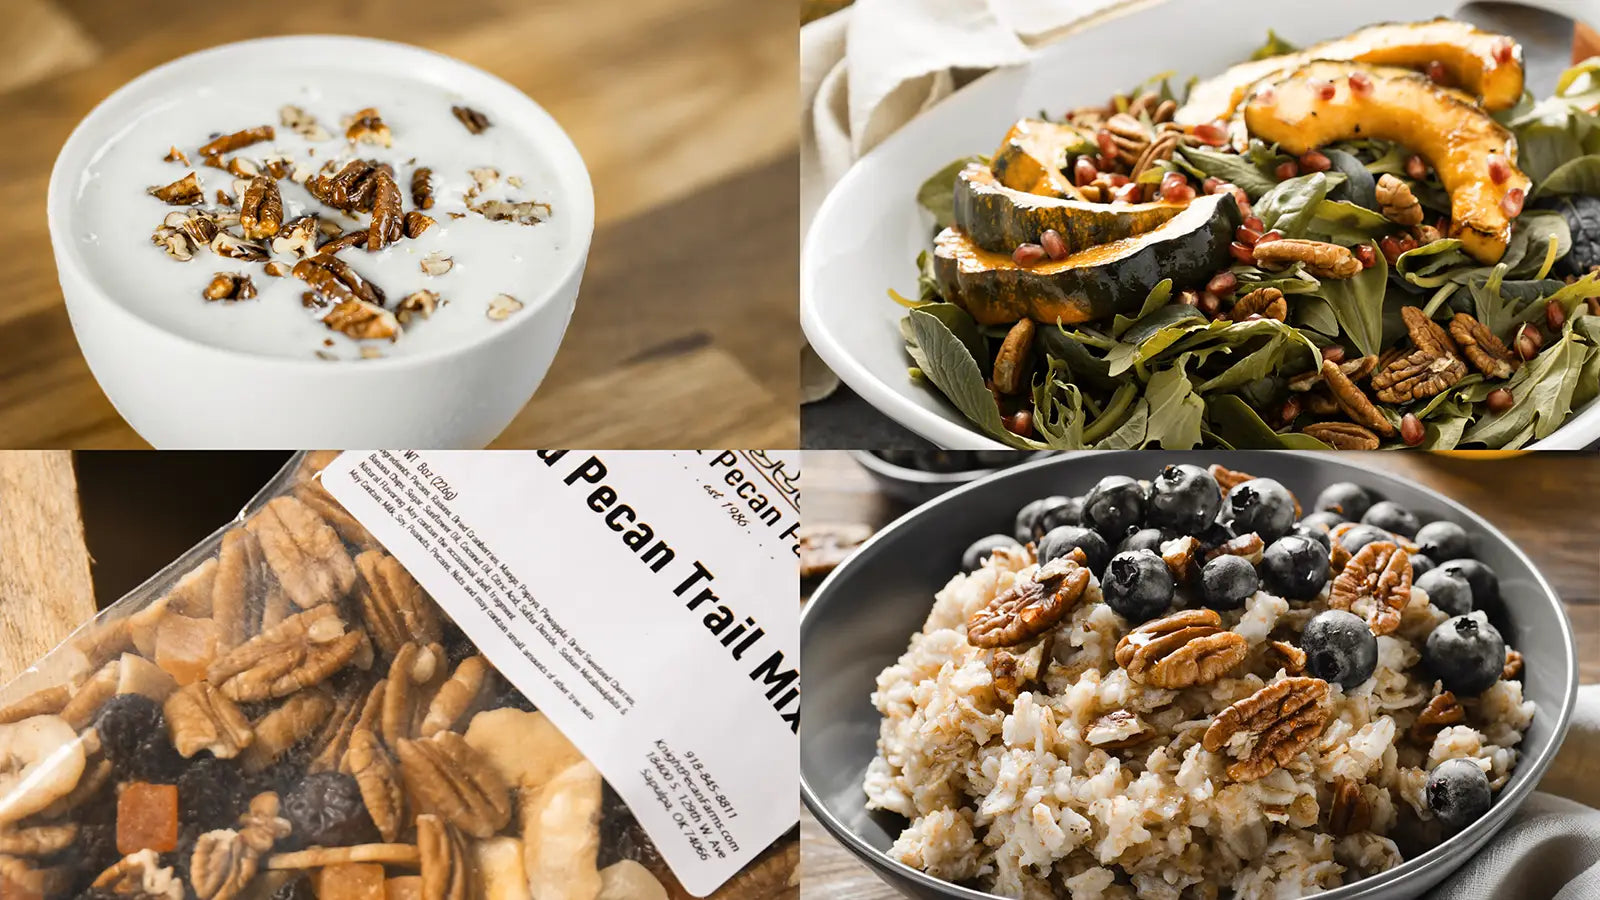 Photos of pecan recipe ideas for oatmeal, salad, yogurt and trail mix